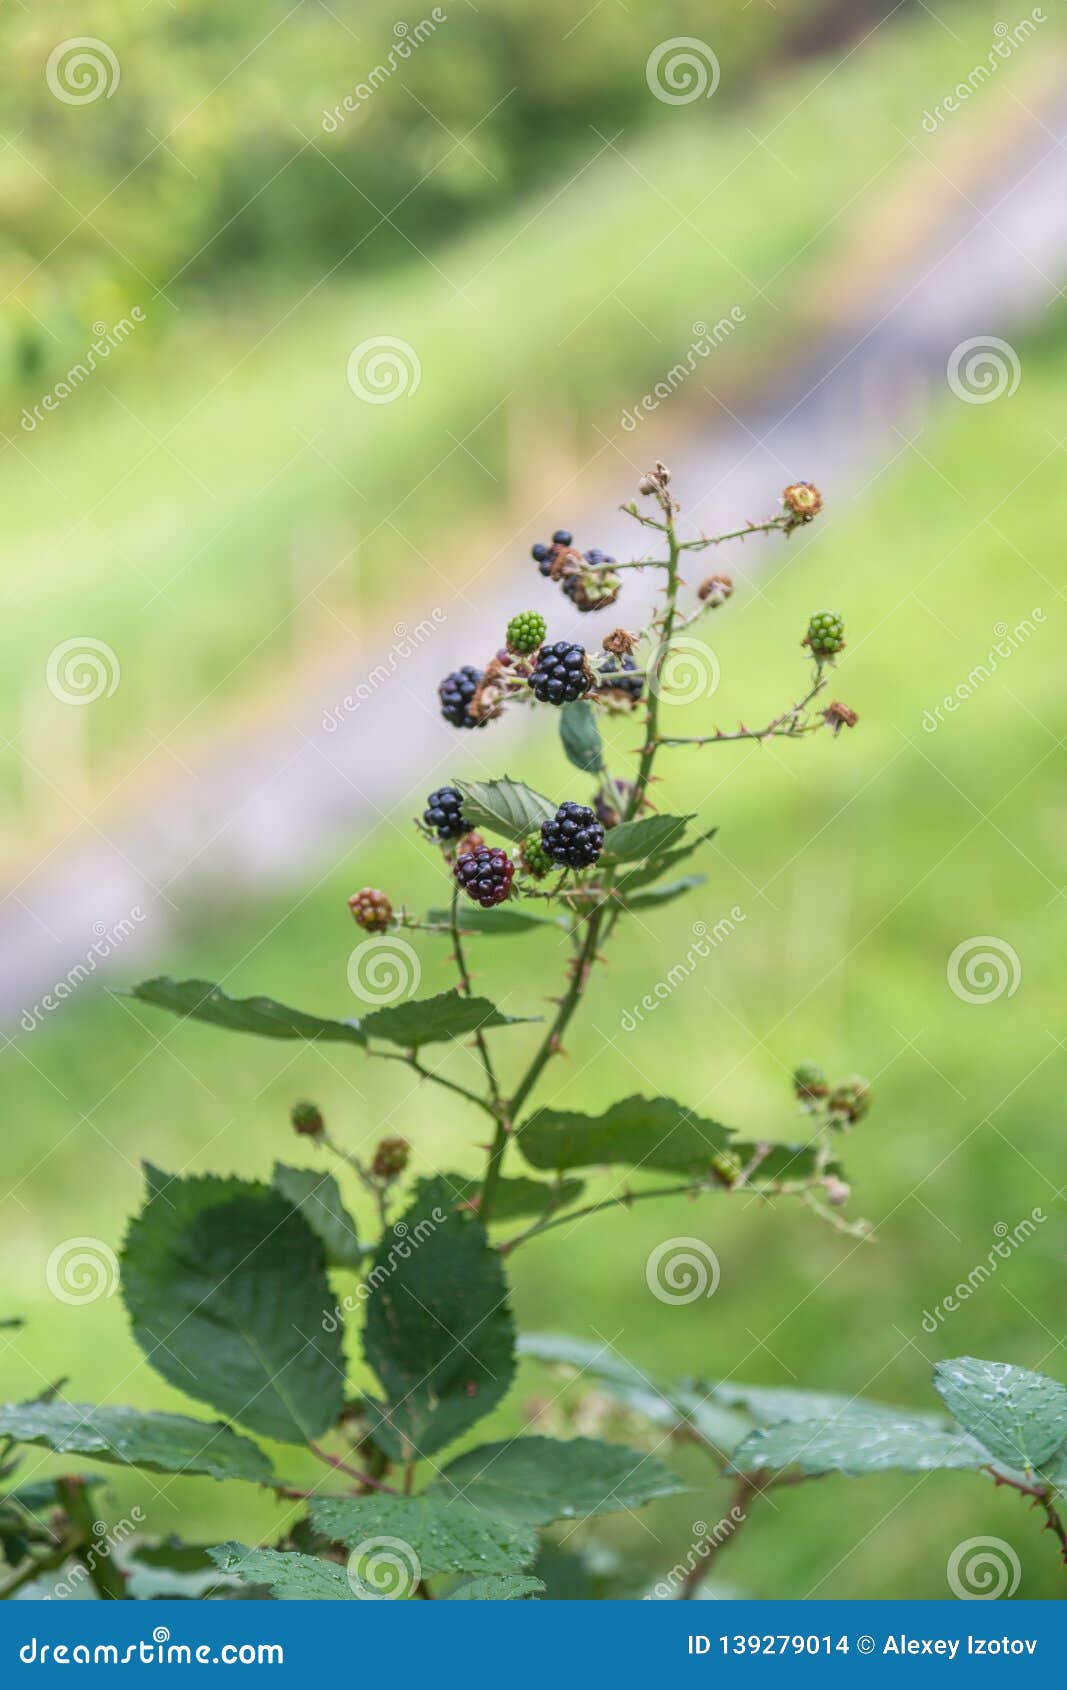 blackberry berries grow in the bush in the hirsch park in lucerne, switzerland